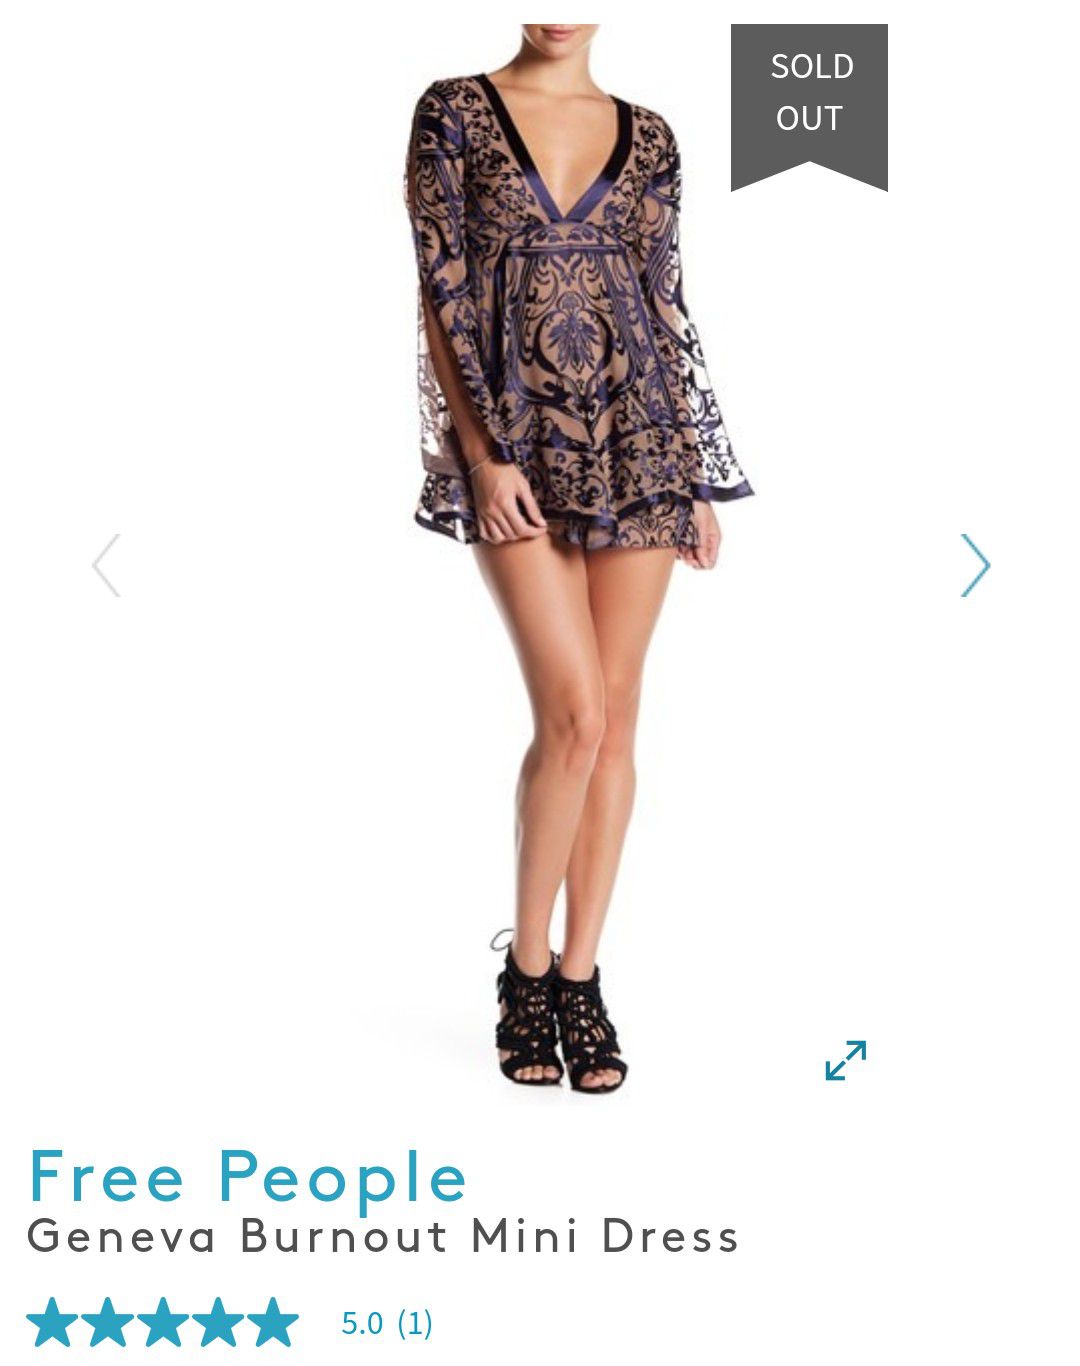 New with Tag! Free People mini dress